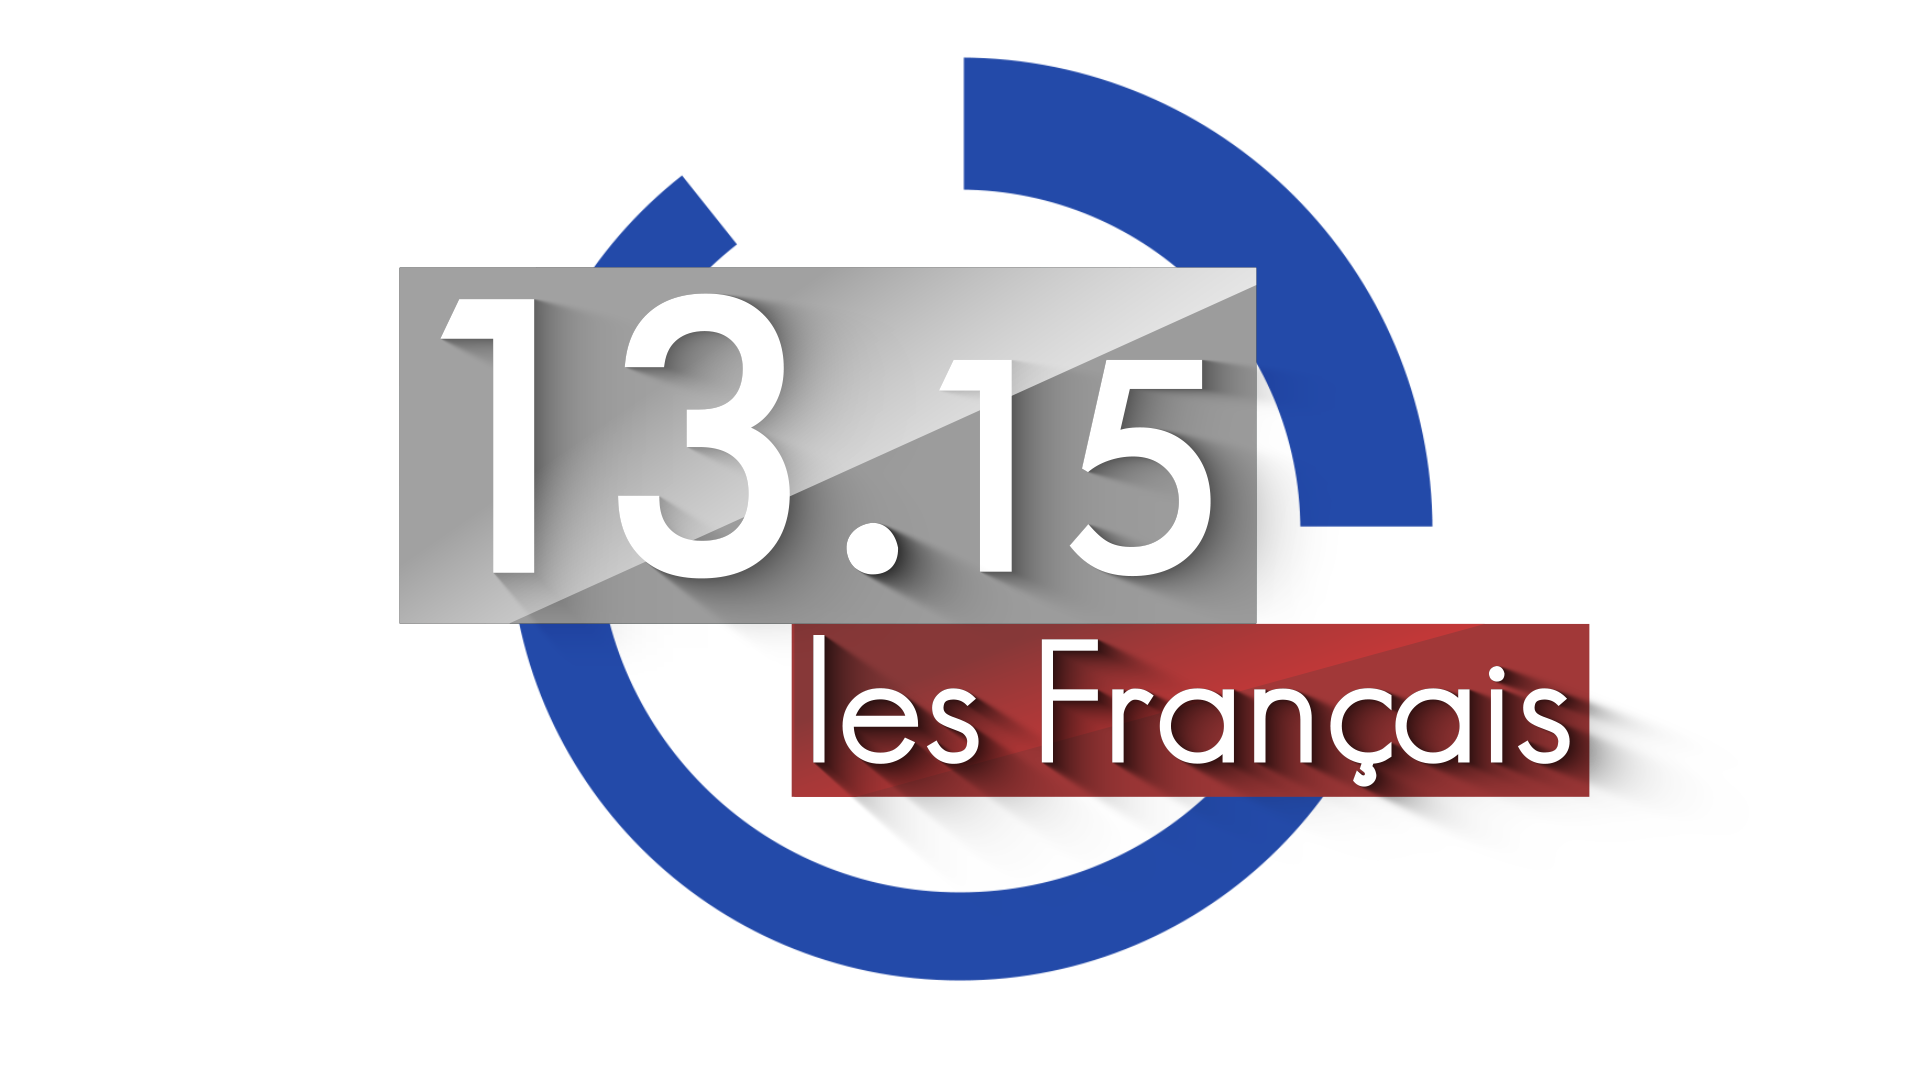 13h15 francais